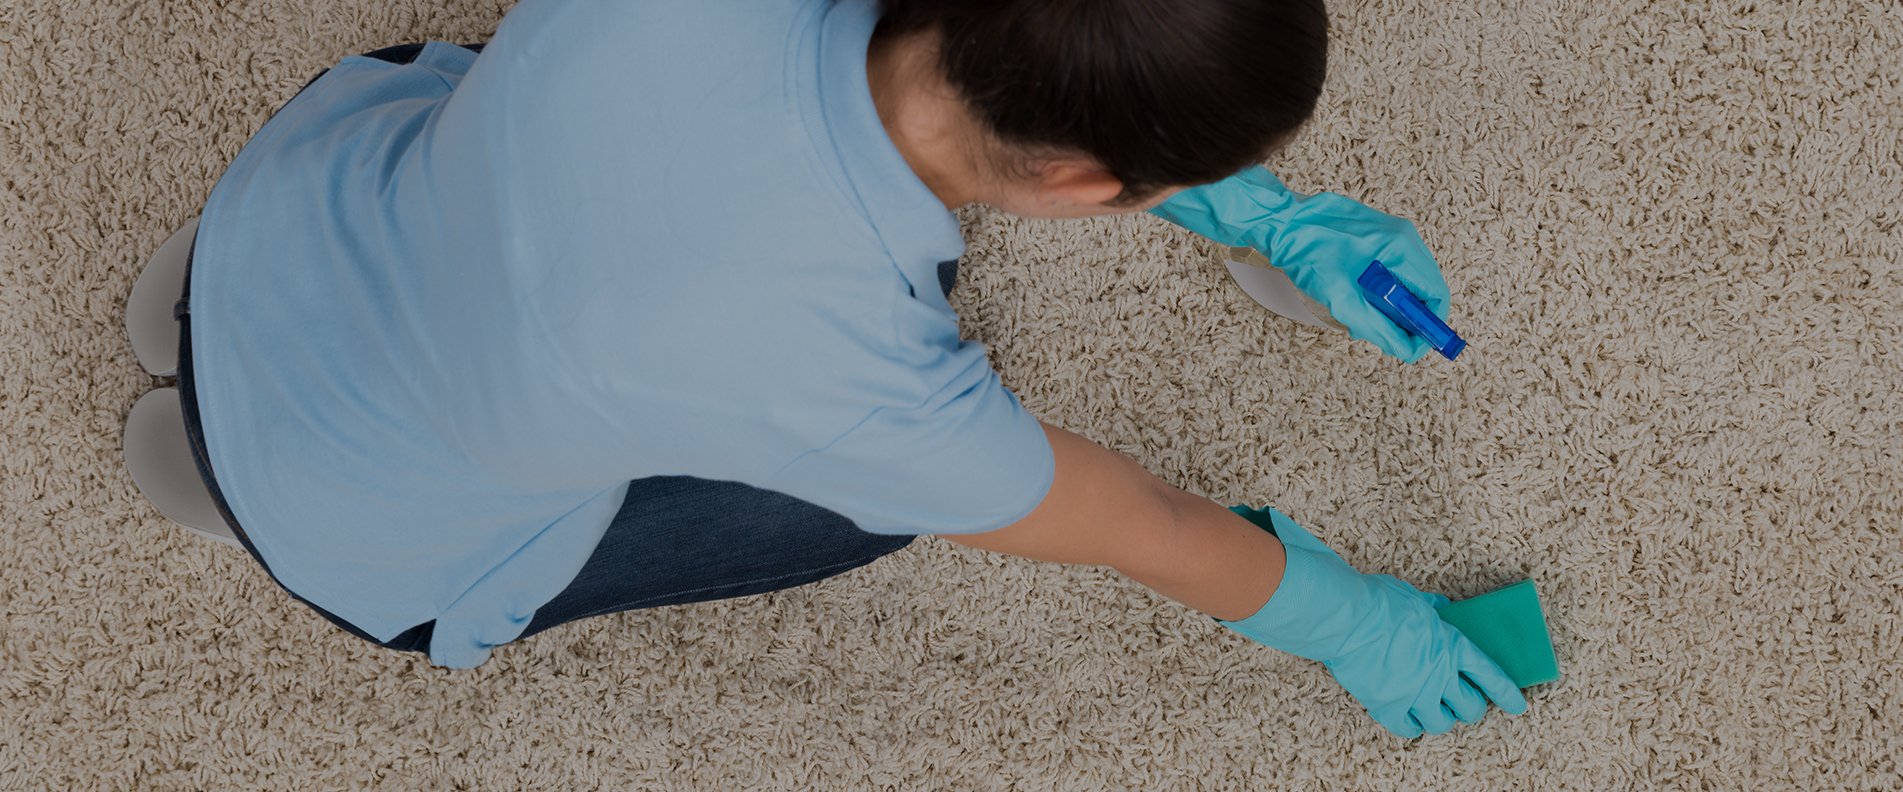 Carpet Cleaning N2